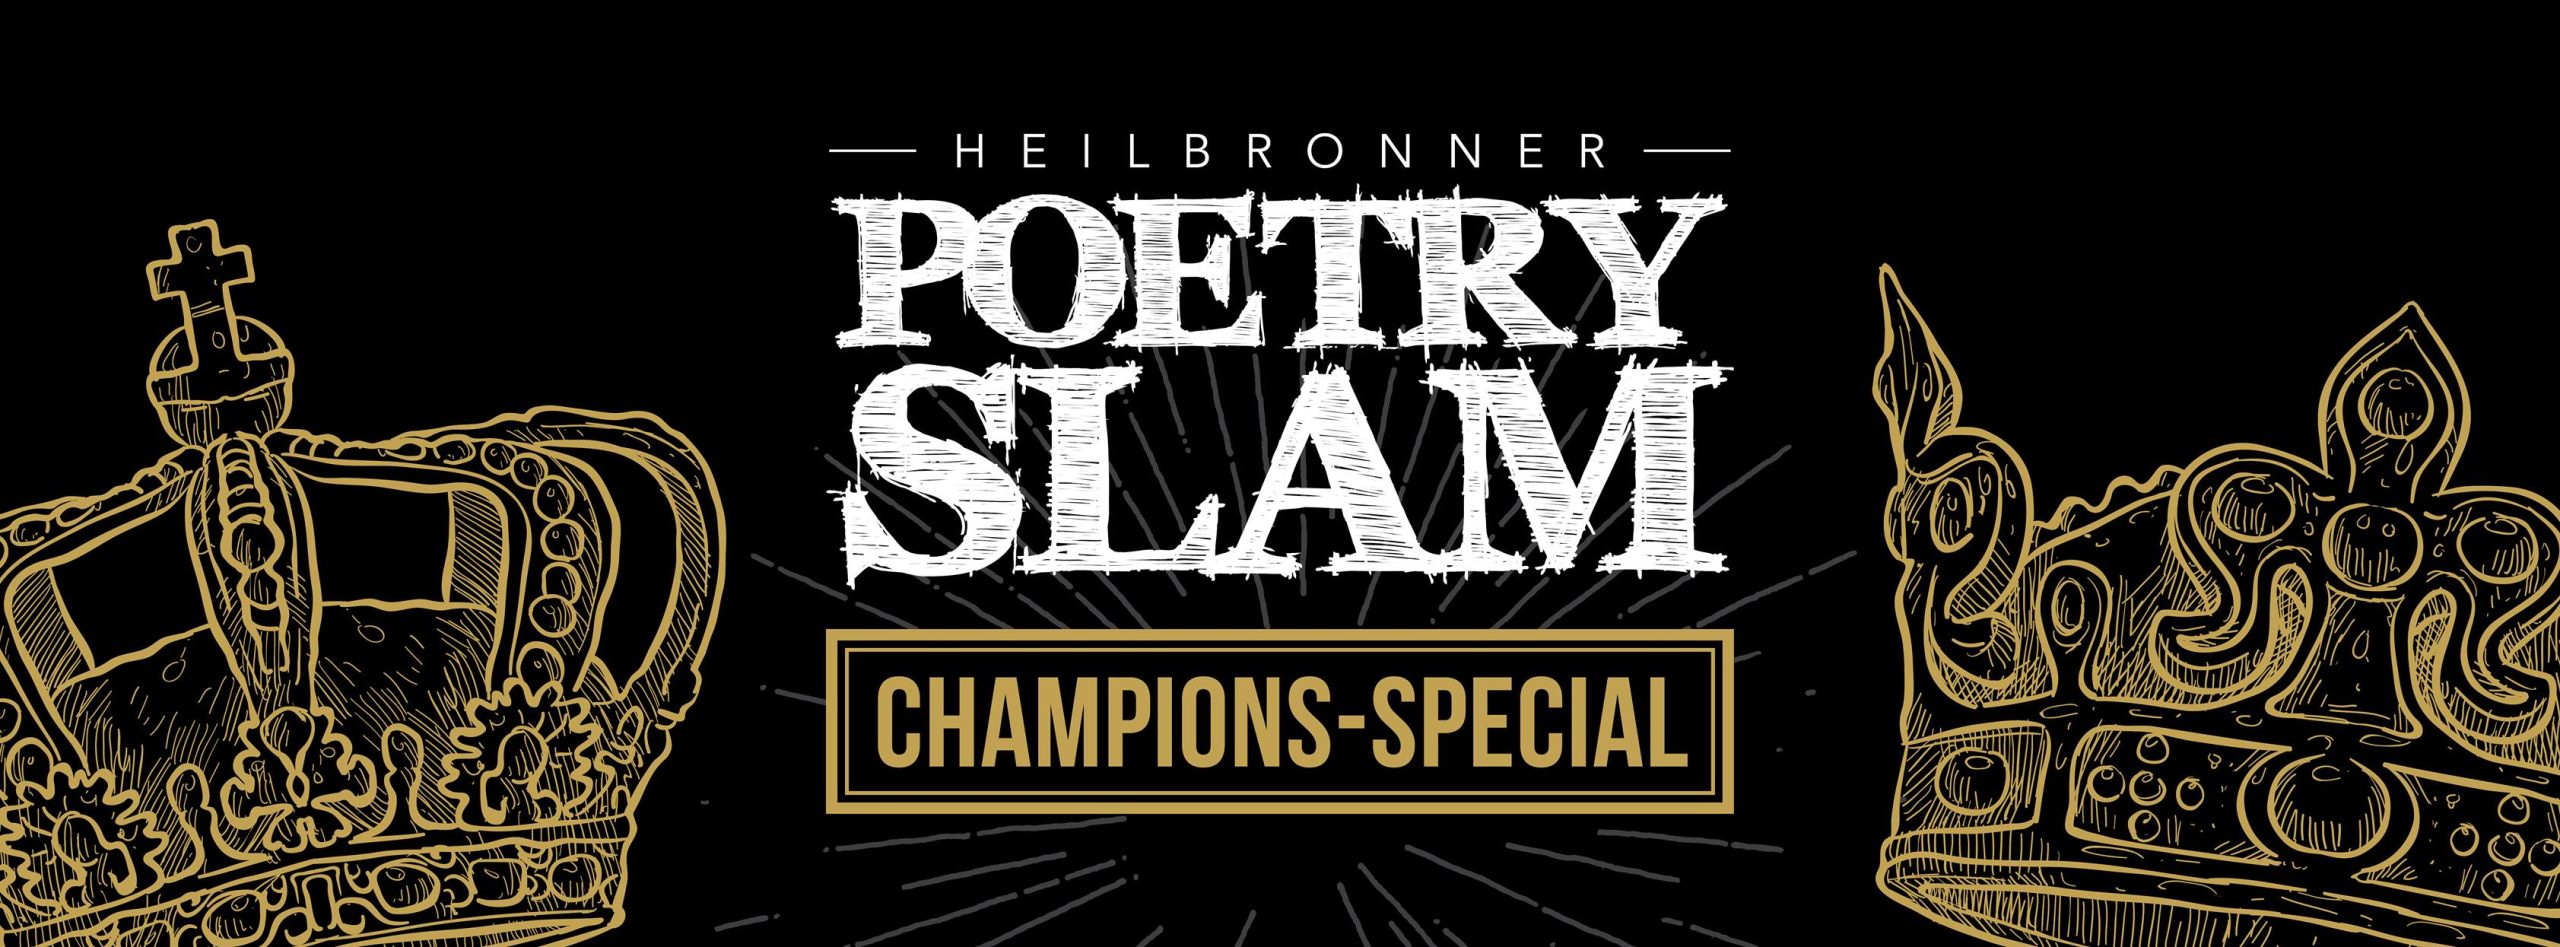 Heilbronner Poetry Slam Champions Special